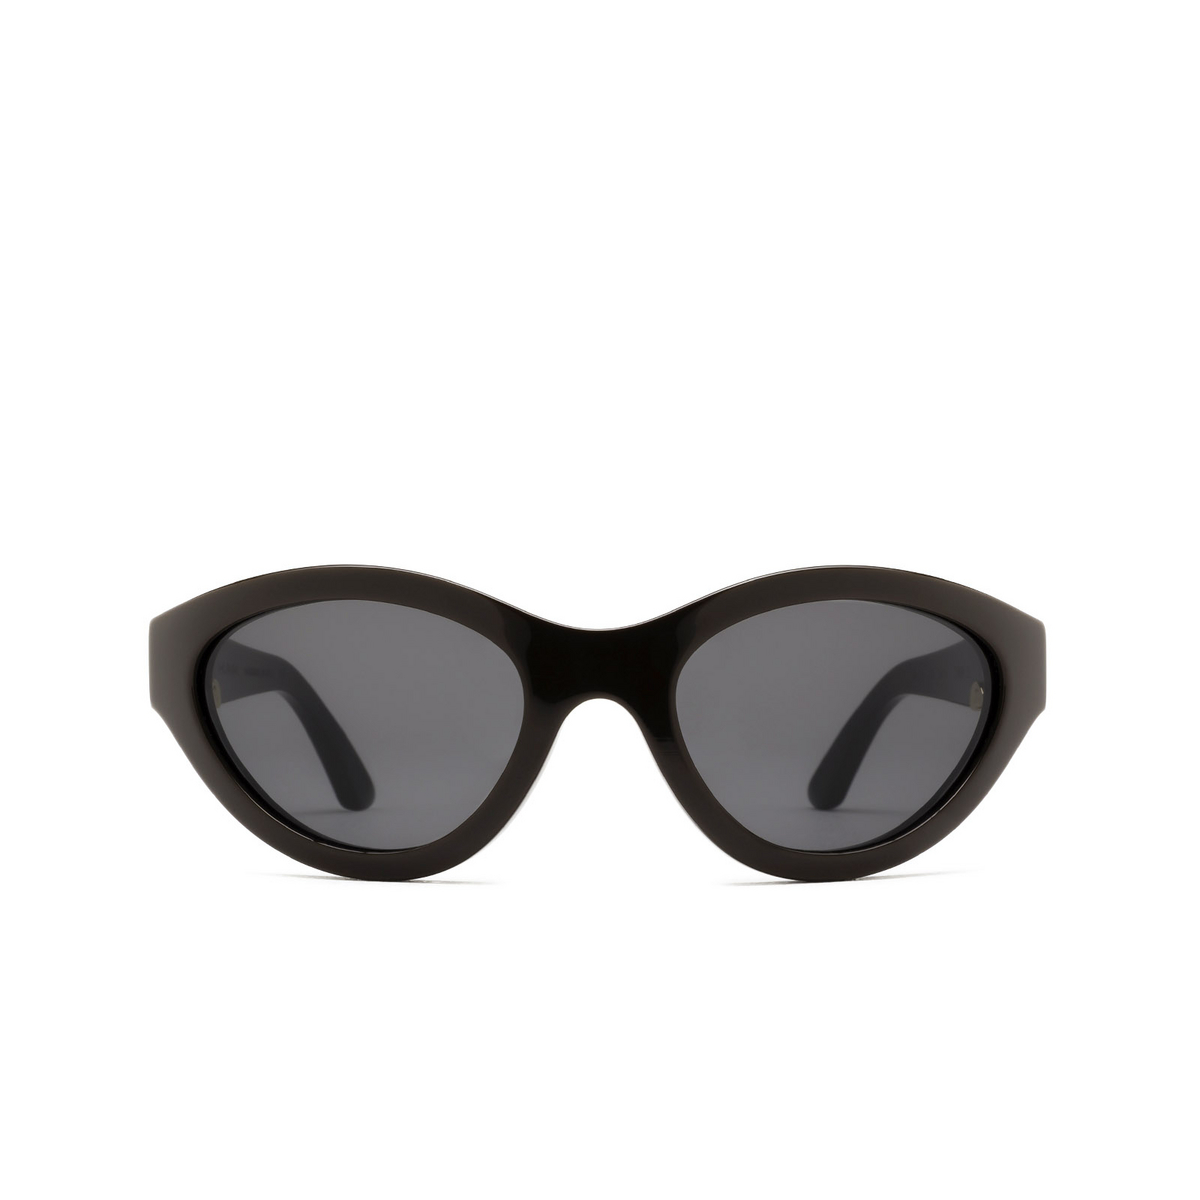 Huma® Mask Sunglasses: Linda color Chocolate 22 - front view.